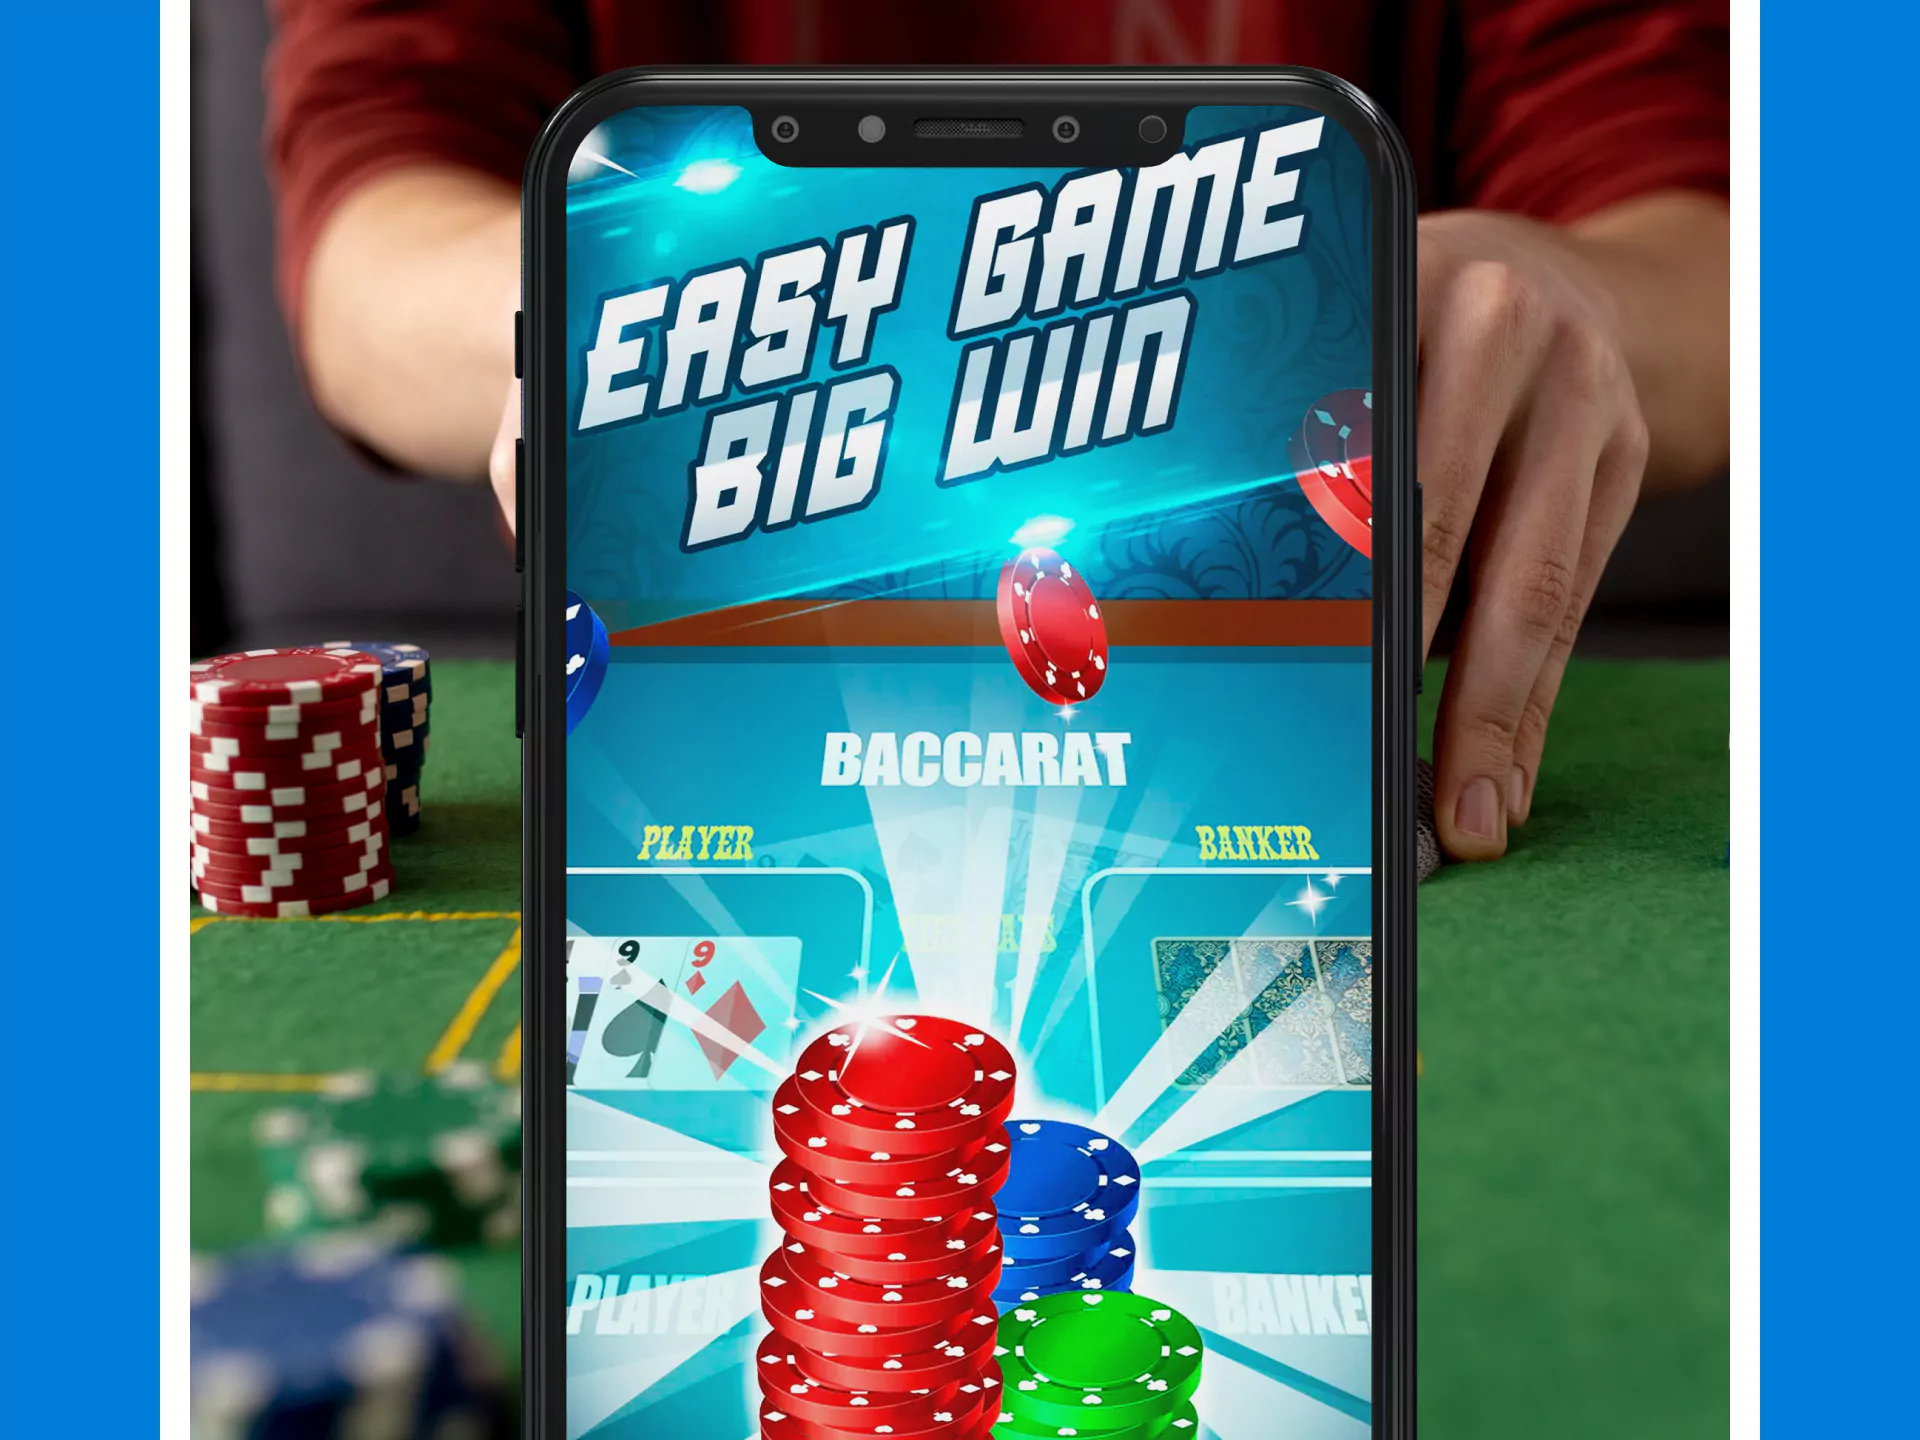 You can play baccarat through the Crickex app.